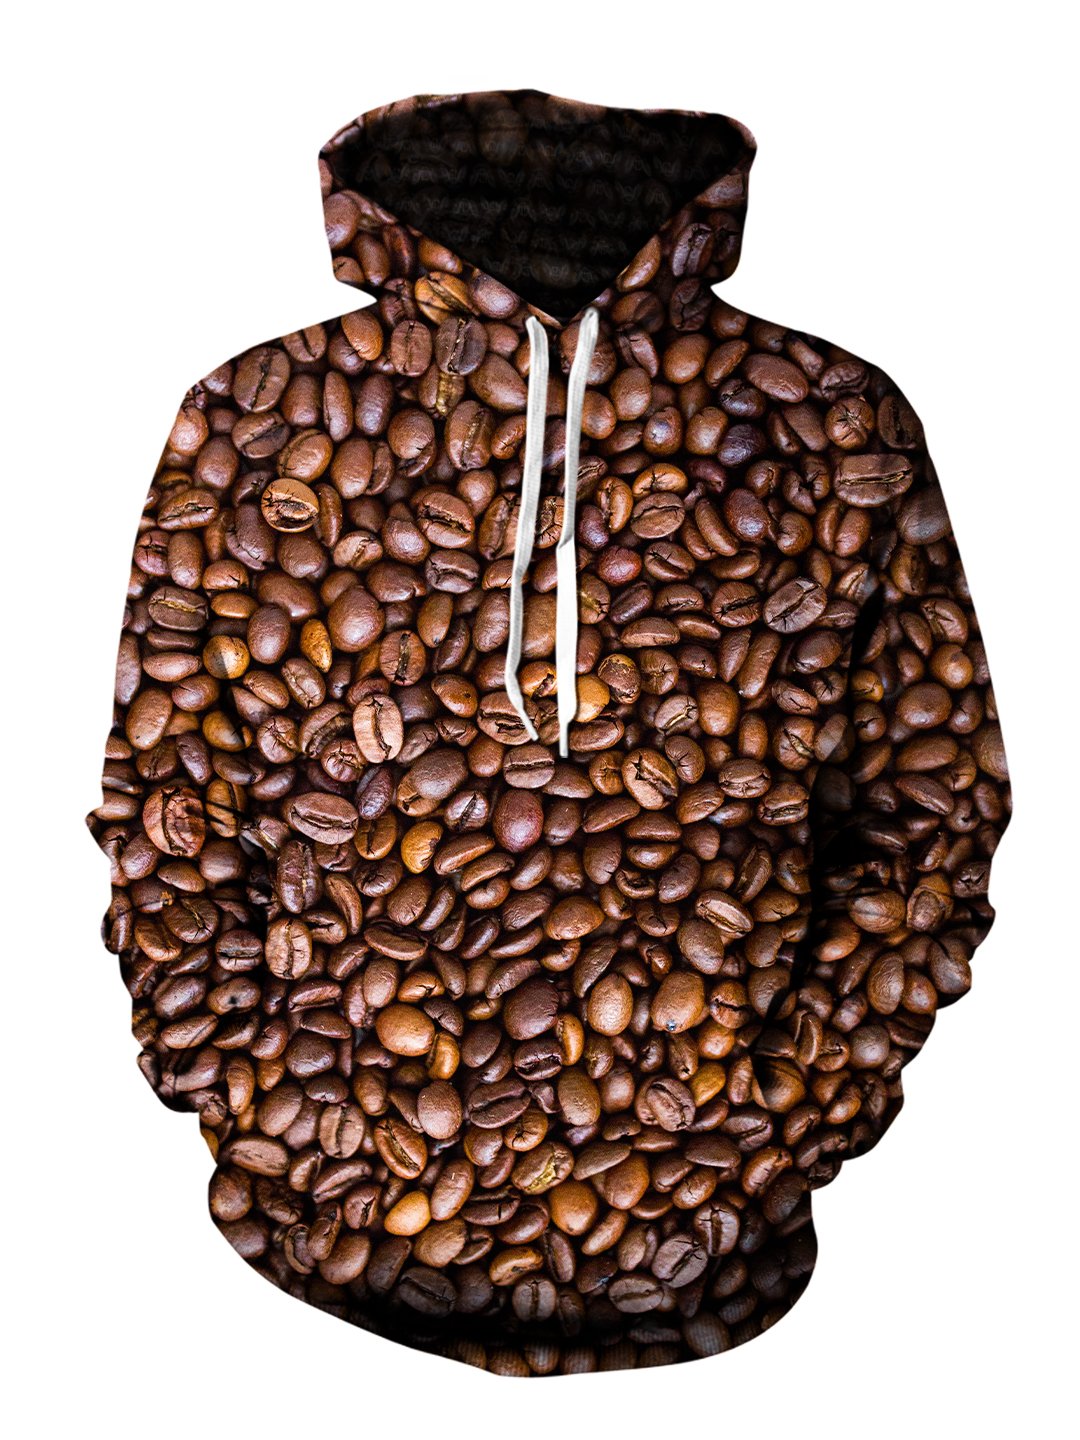 Men's brown & black coffee bean pullover hoodie front view.